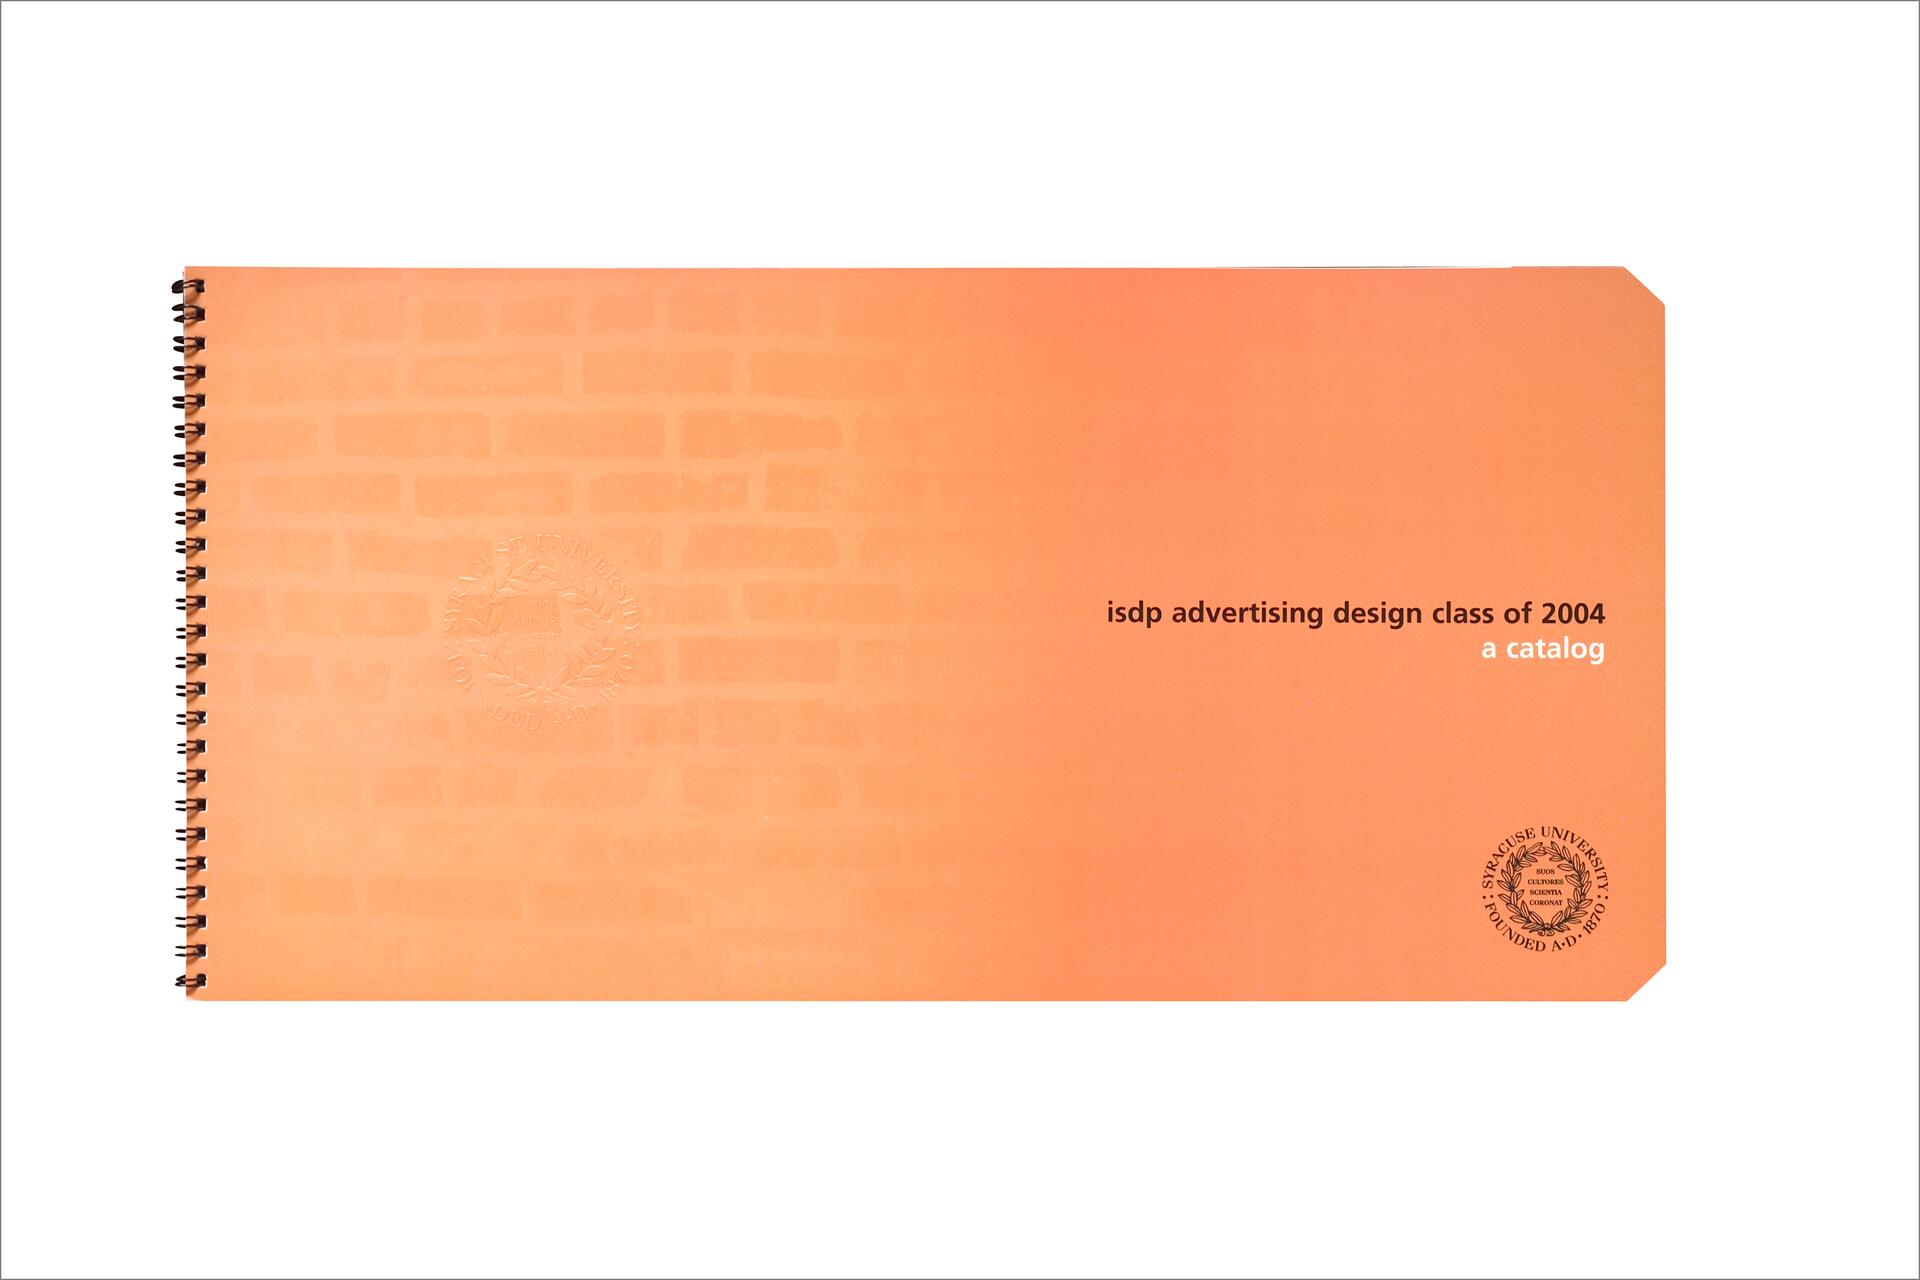 05A-86A_ISDP Advertising Design Design_Richard Zeid